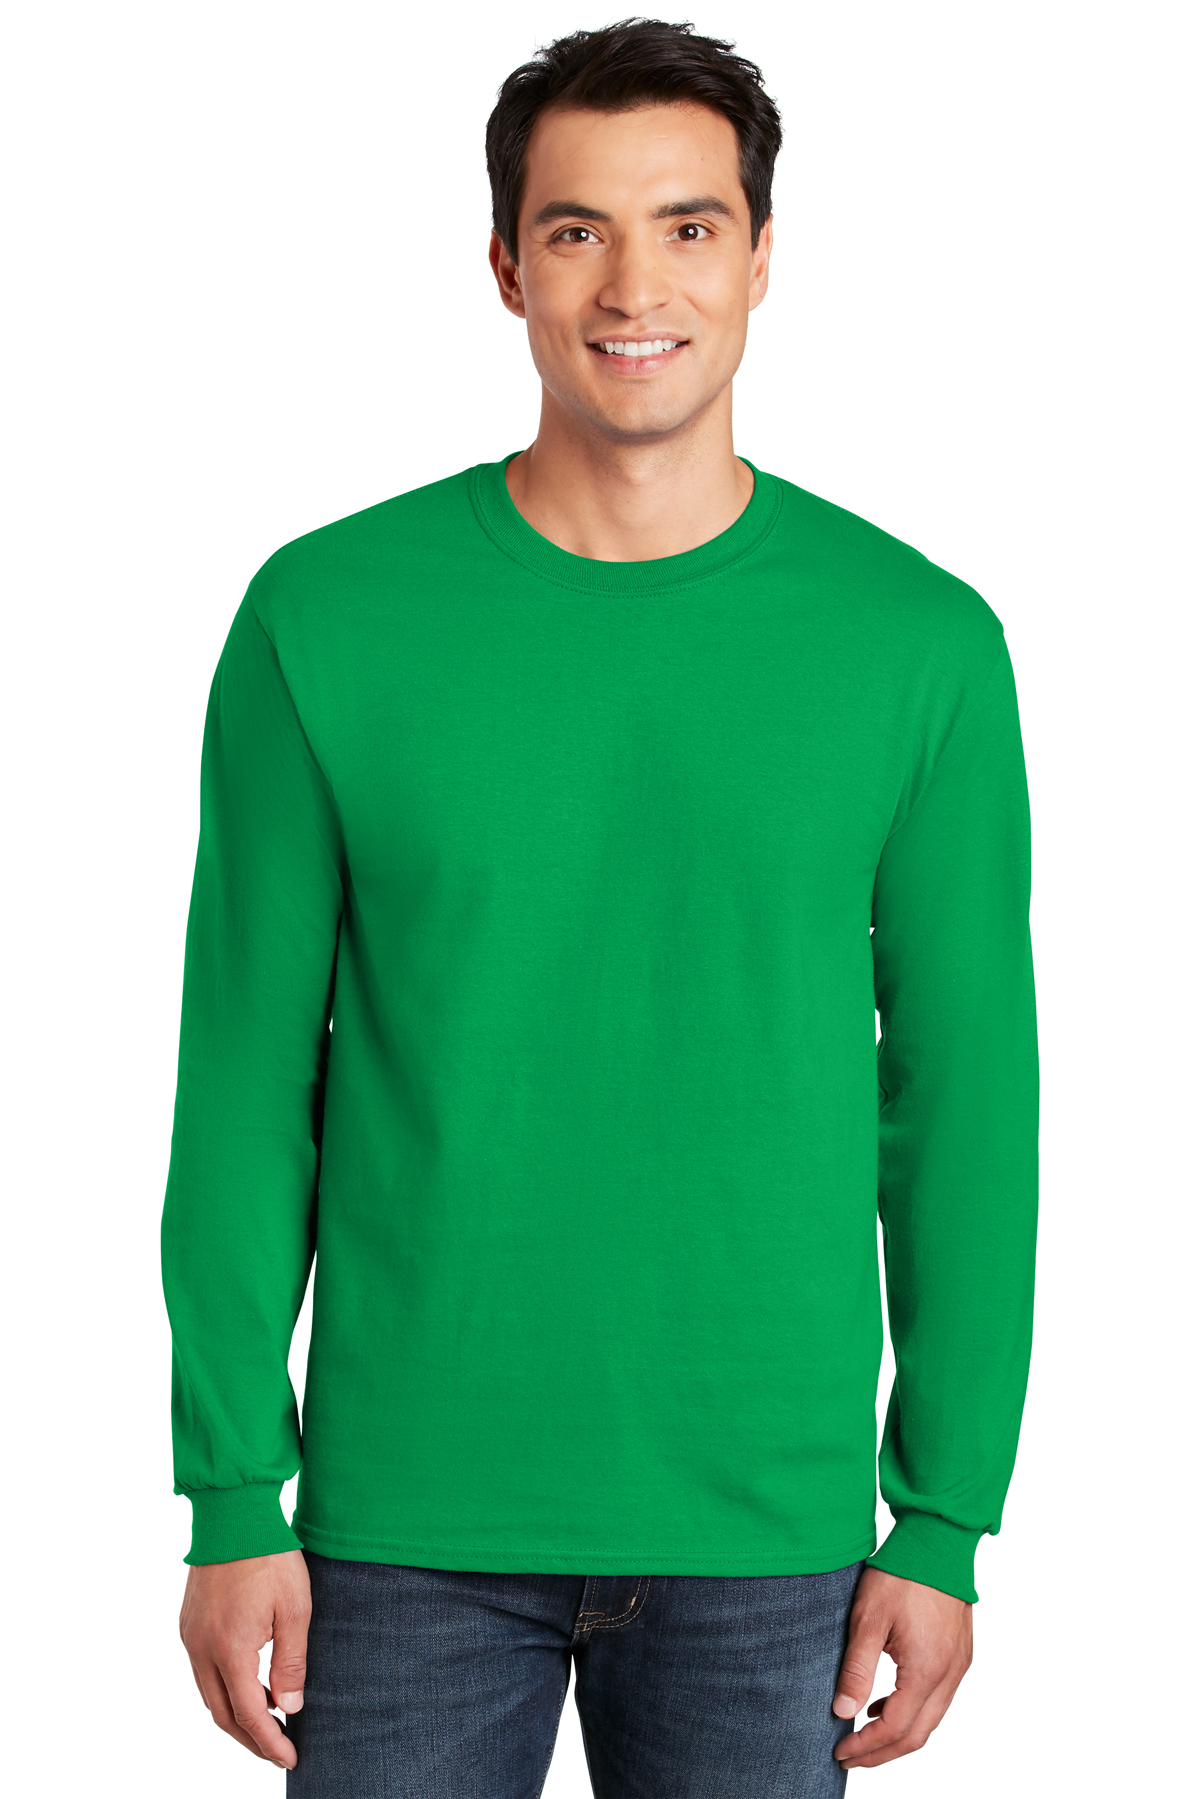 Sleeve SanMar Product | T-Shirt US Cotton Gildan 100% Cotton | Long Ultra